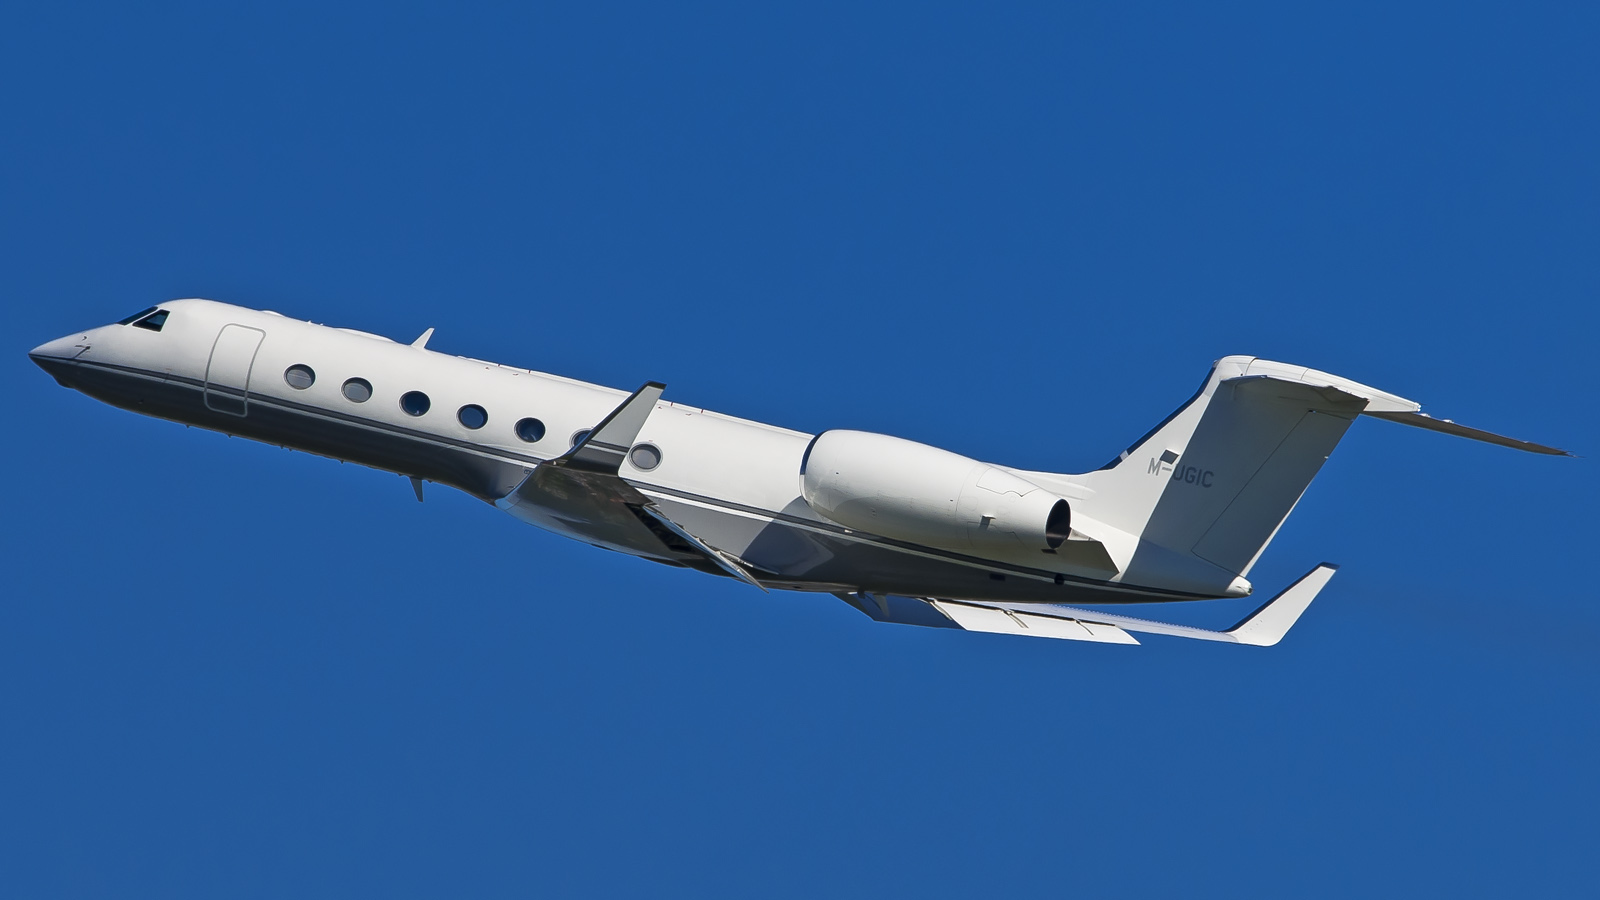 Gulfstream g550 private jet flying